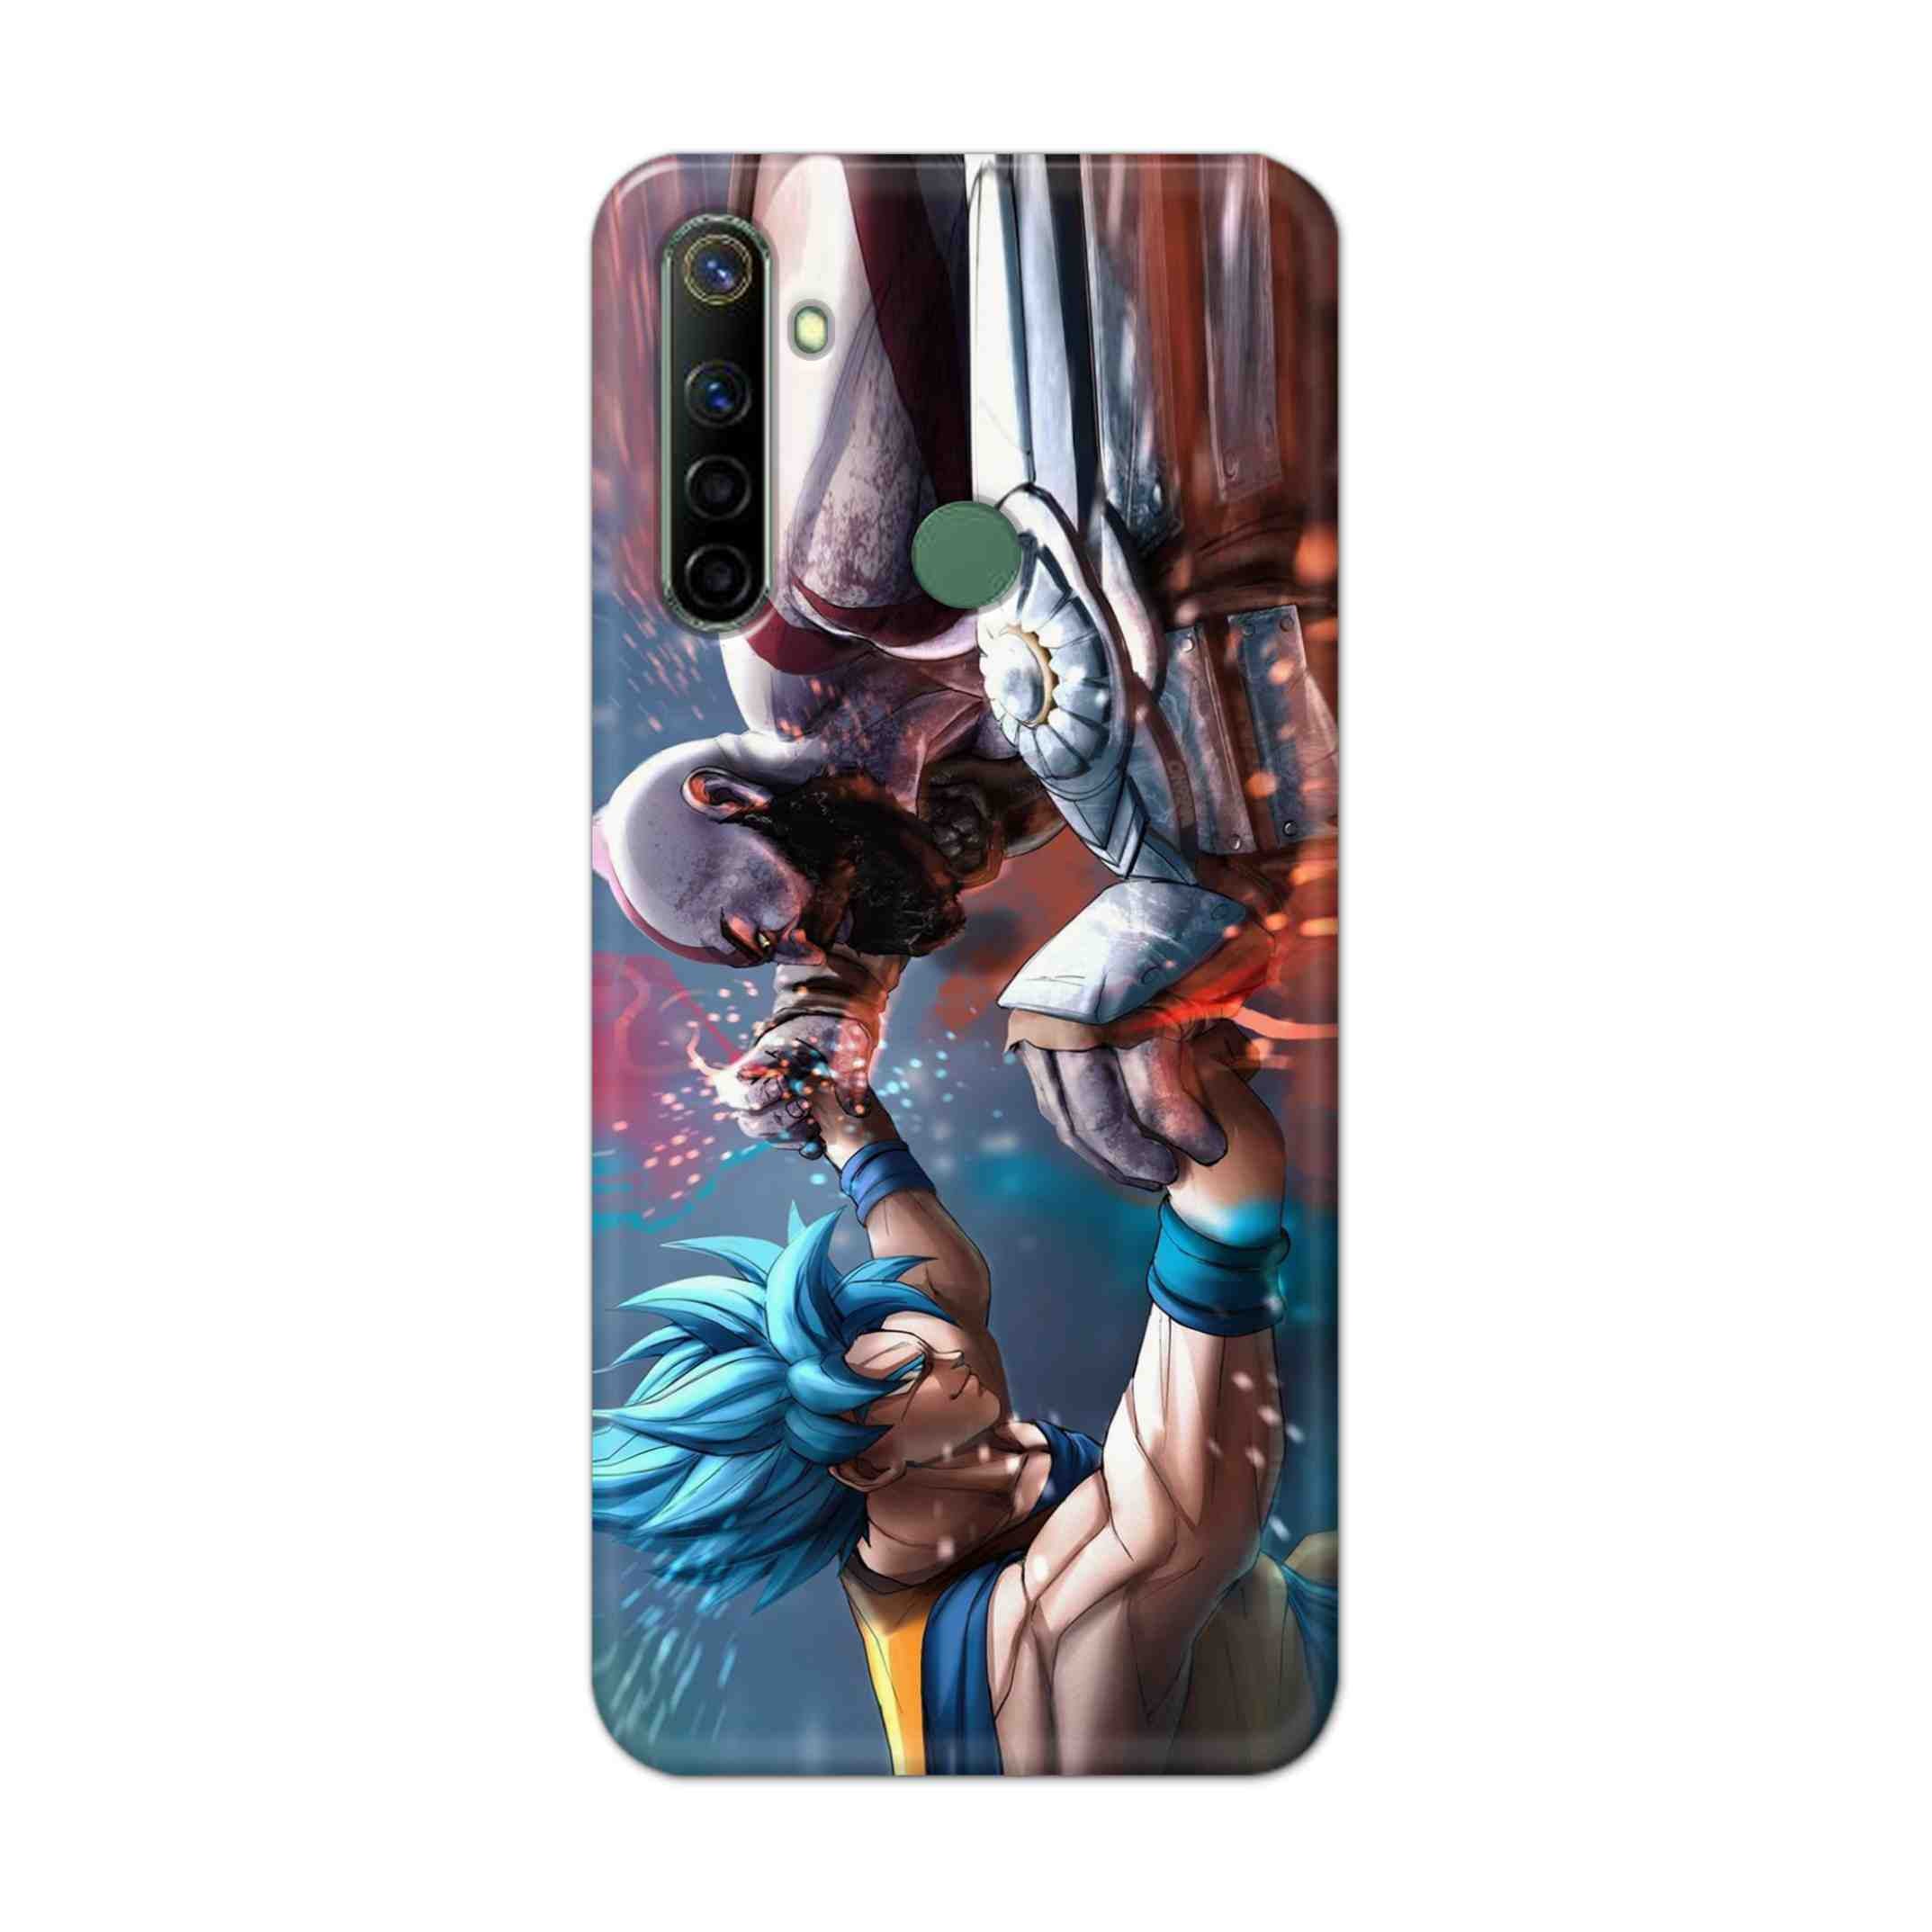 Buy Goku Vs Kratos Hard Back Mobile Phone Case Cover For Realme Narzo 10a Online